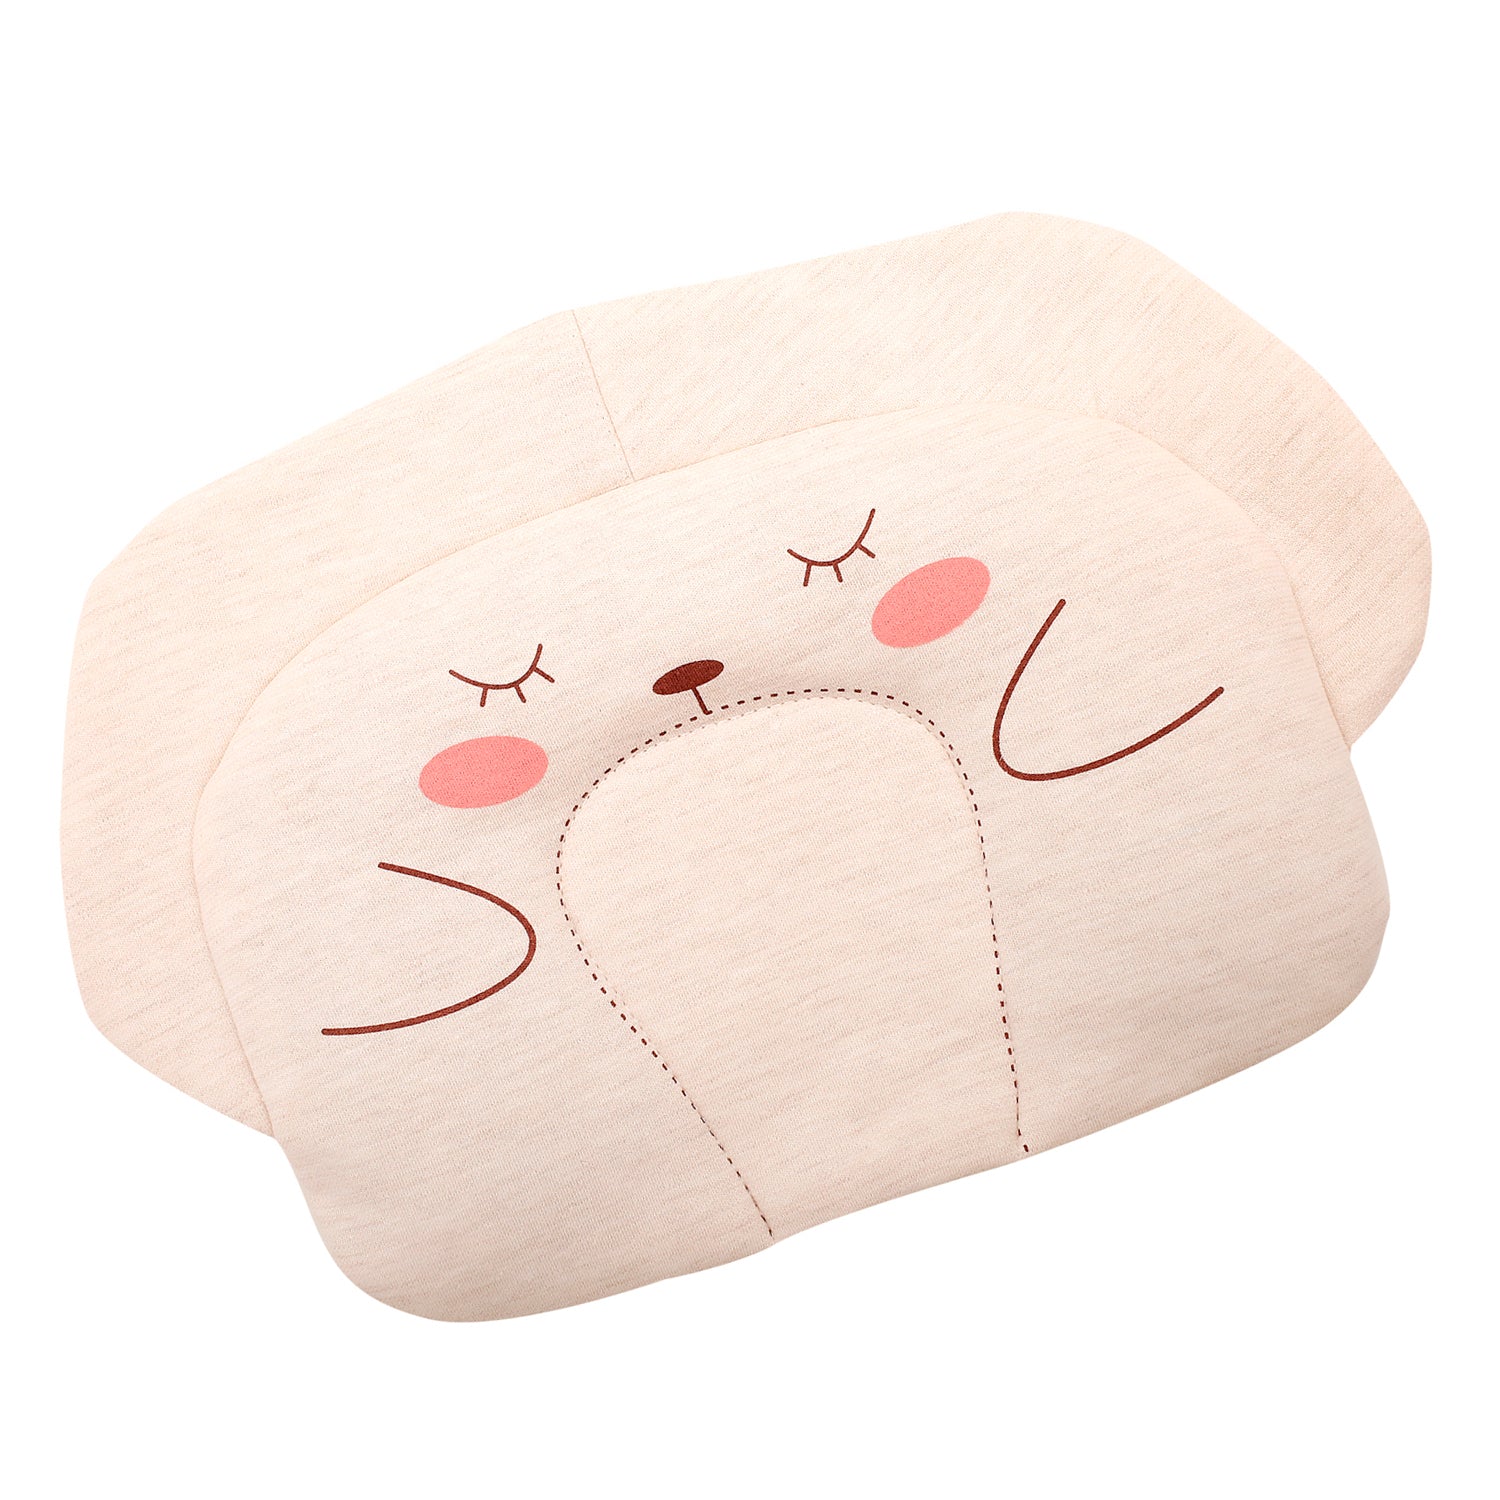 Sleepy Bear Cream Pillow - Baby Moo